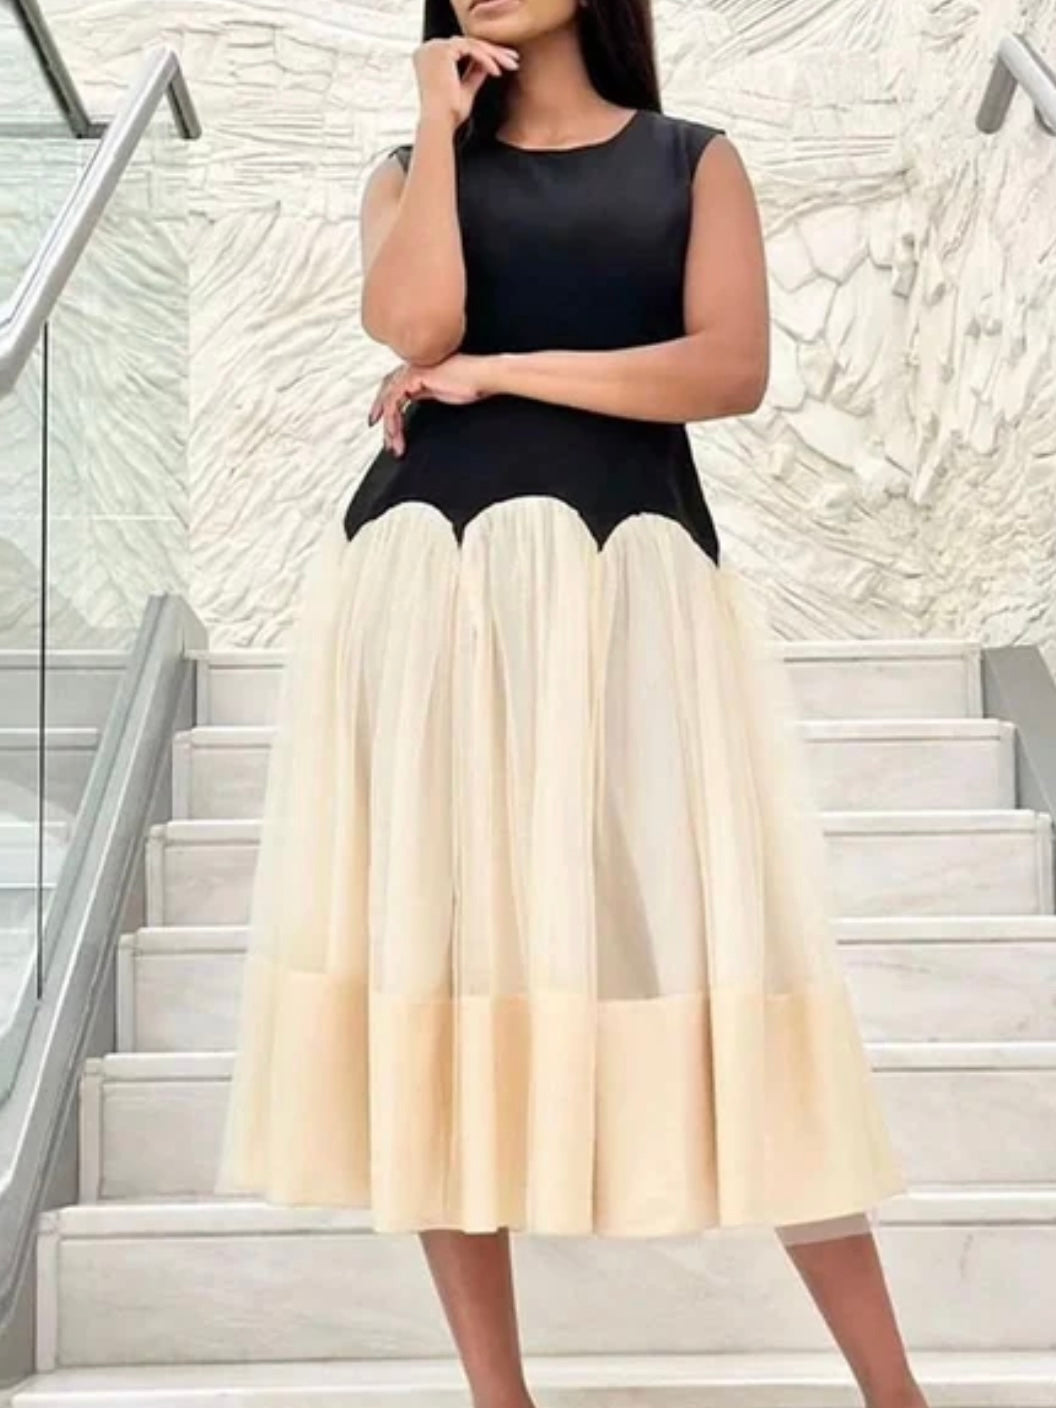 Black and beige skirt sleeveless midi dress